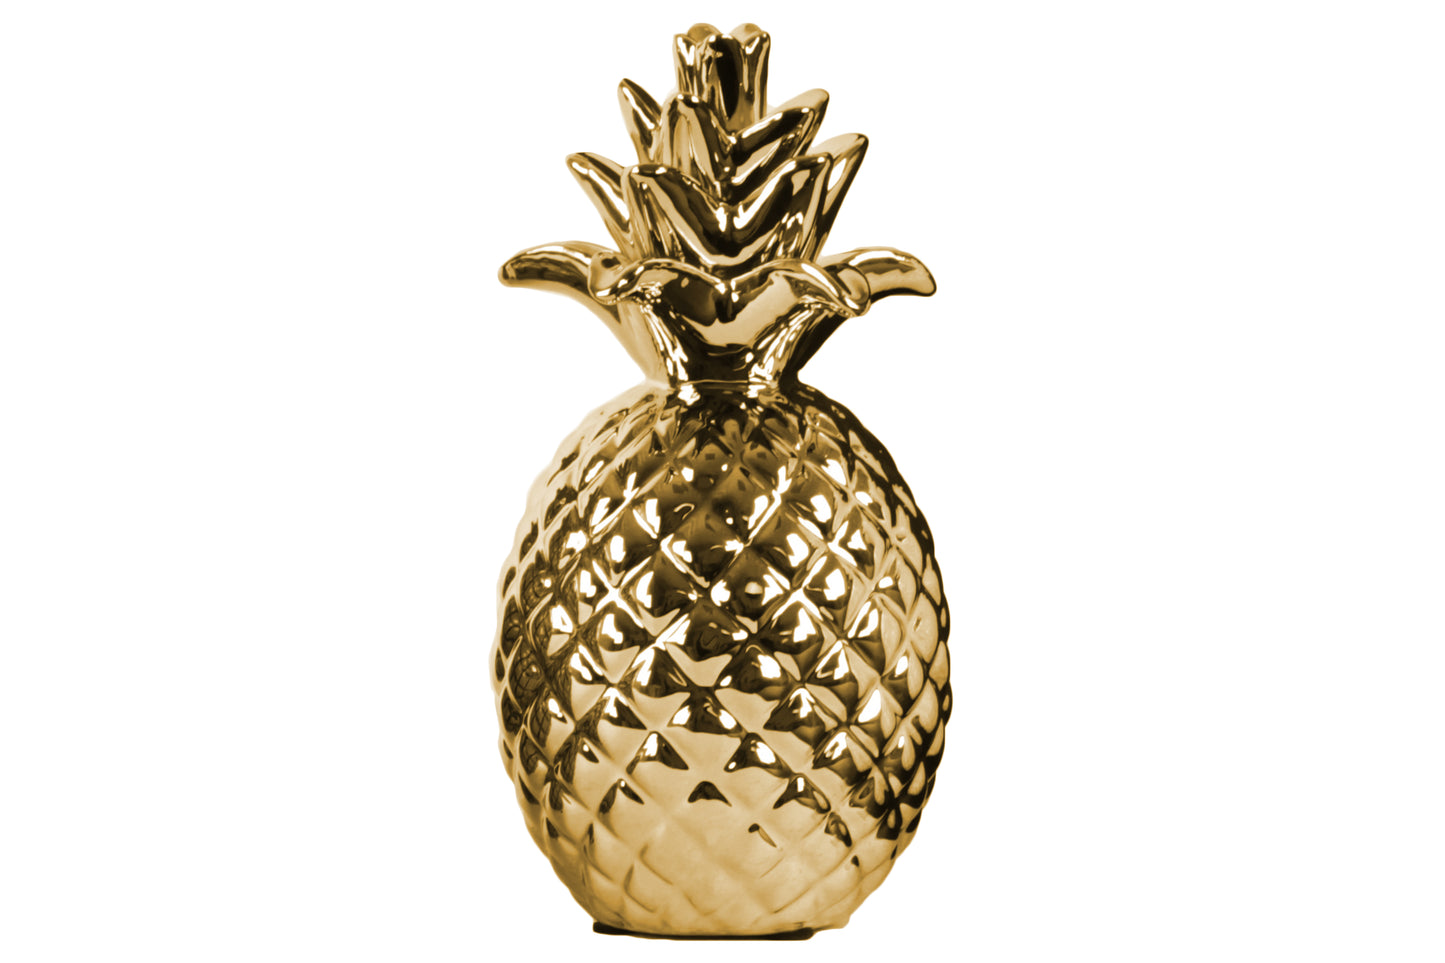 8" Ceramic Pineapple Figurine Pimpled Polished Chrome Finish Gold